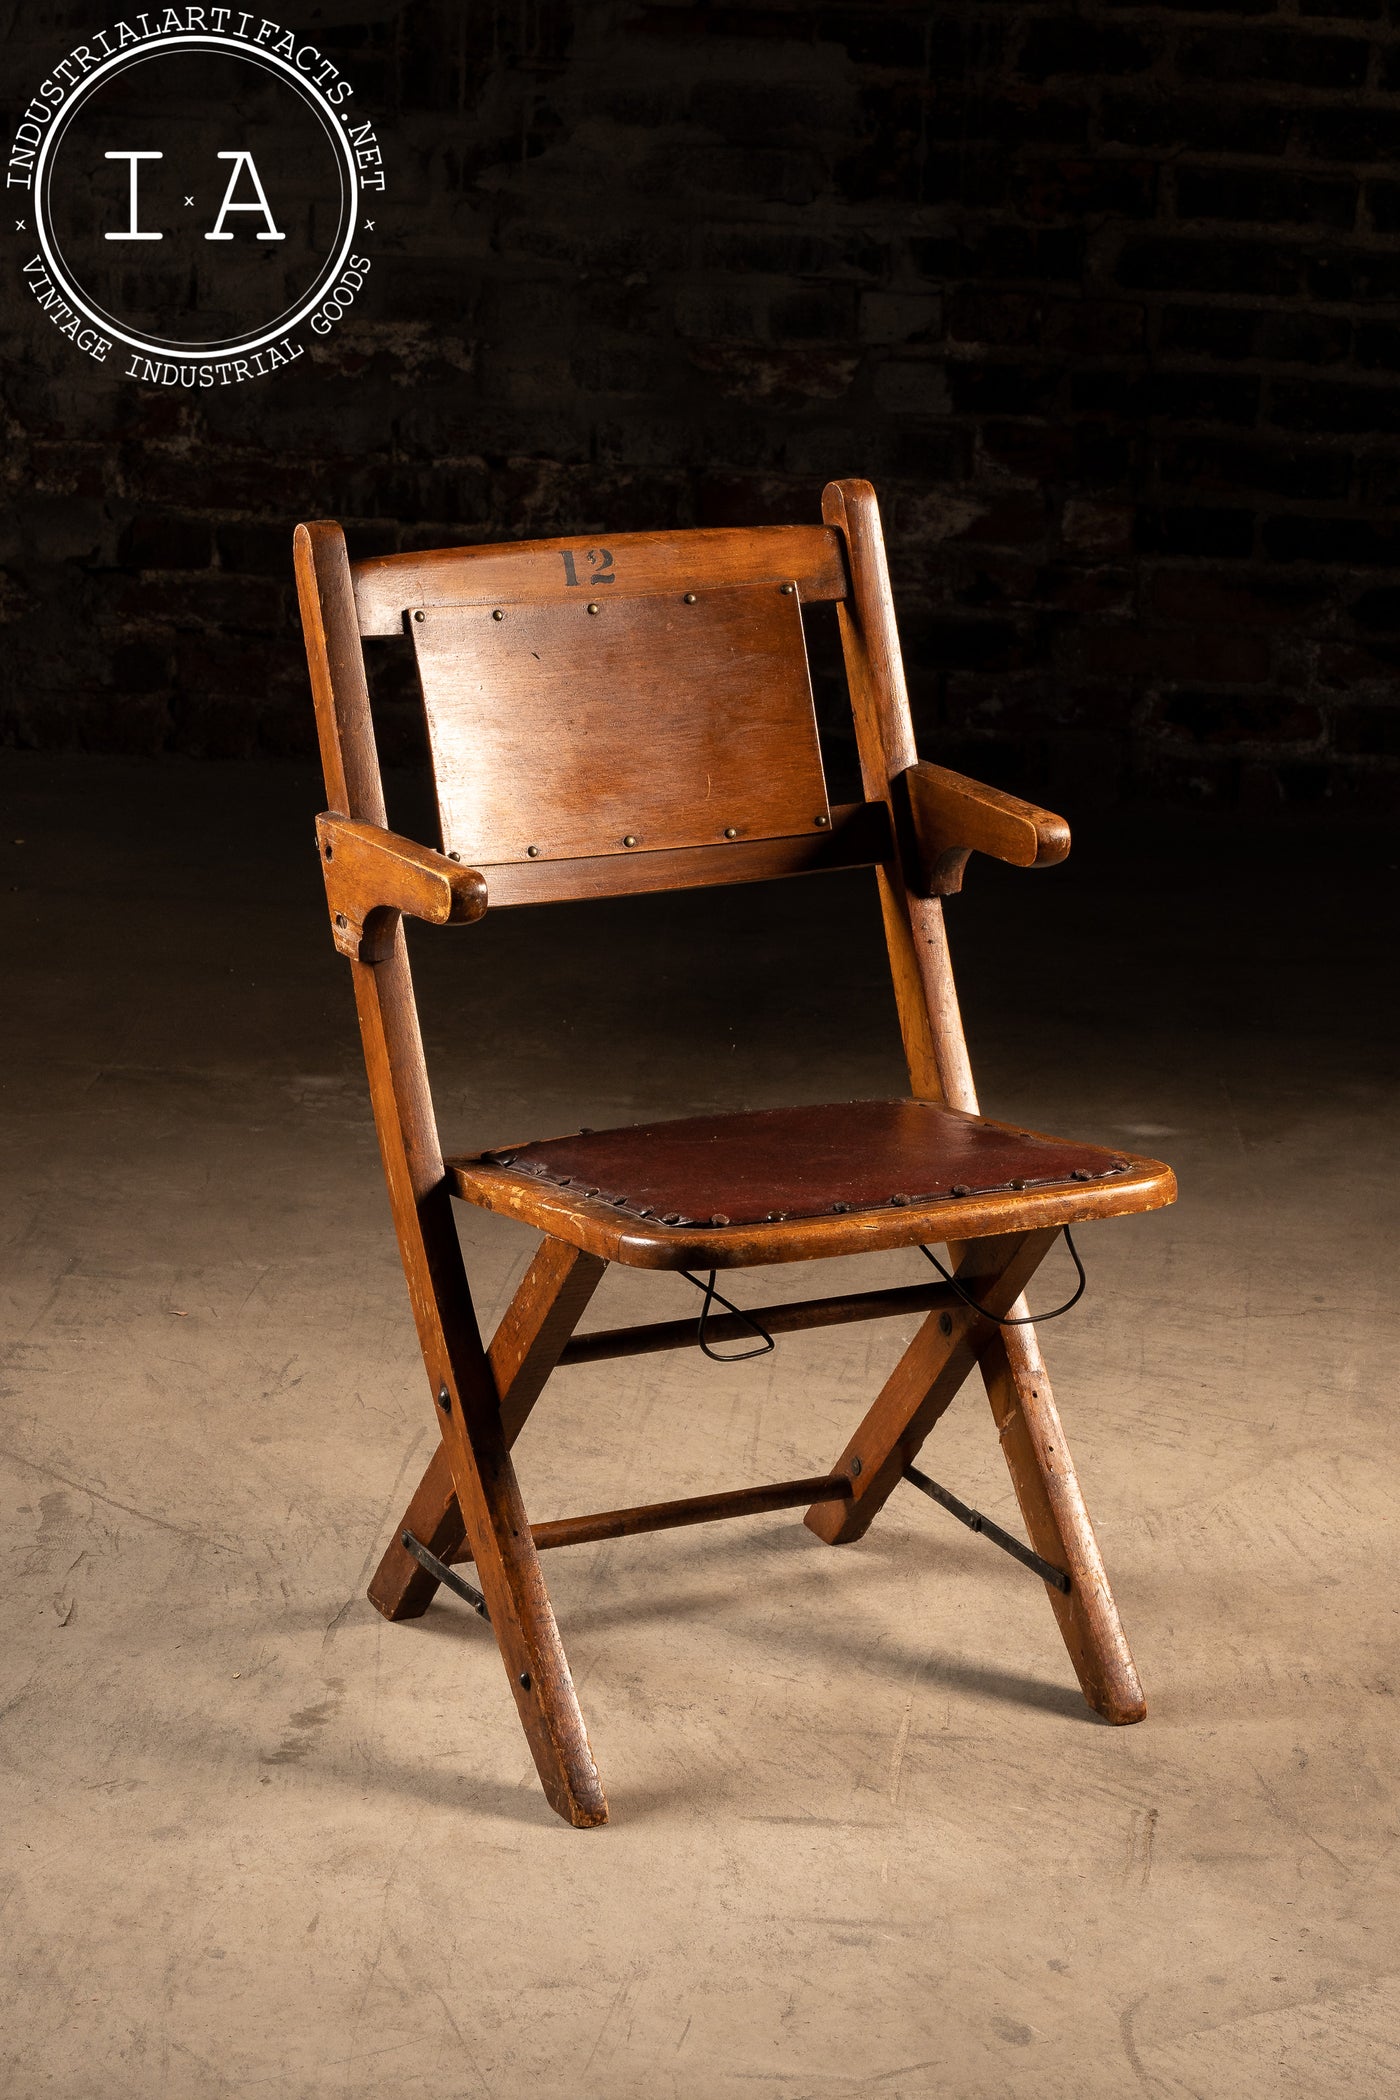 Vintage Folding Chair No. 12